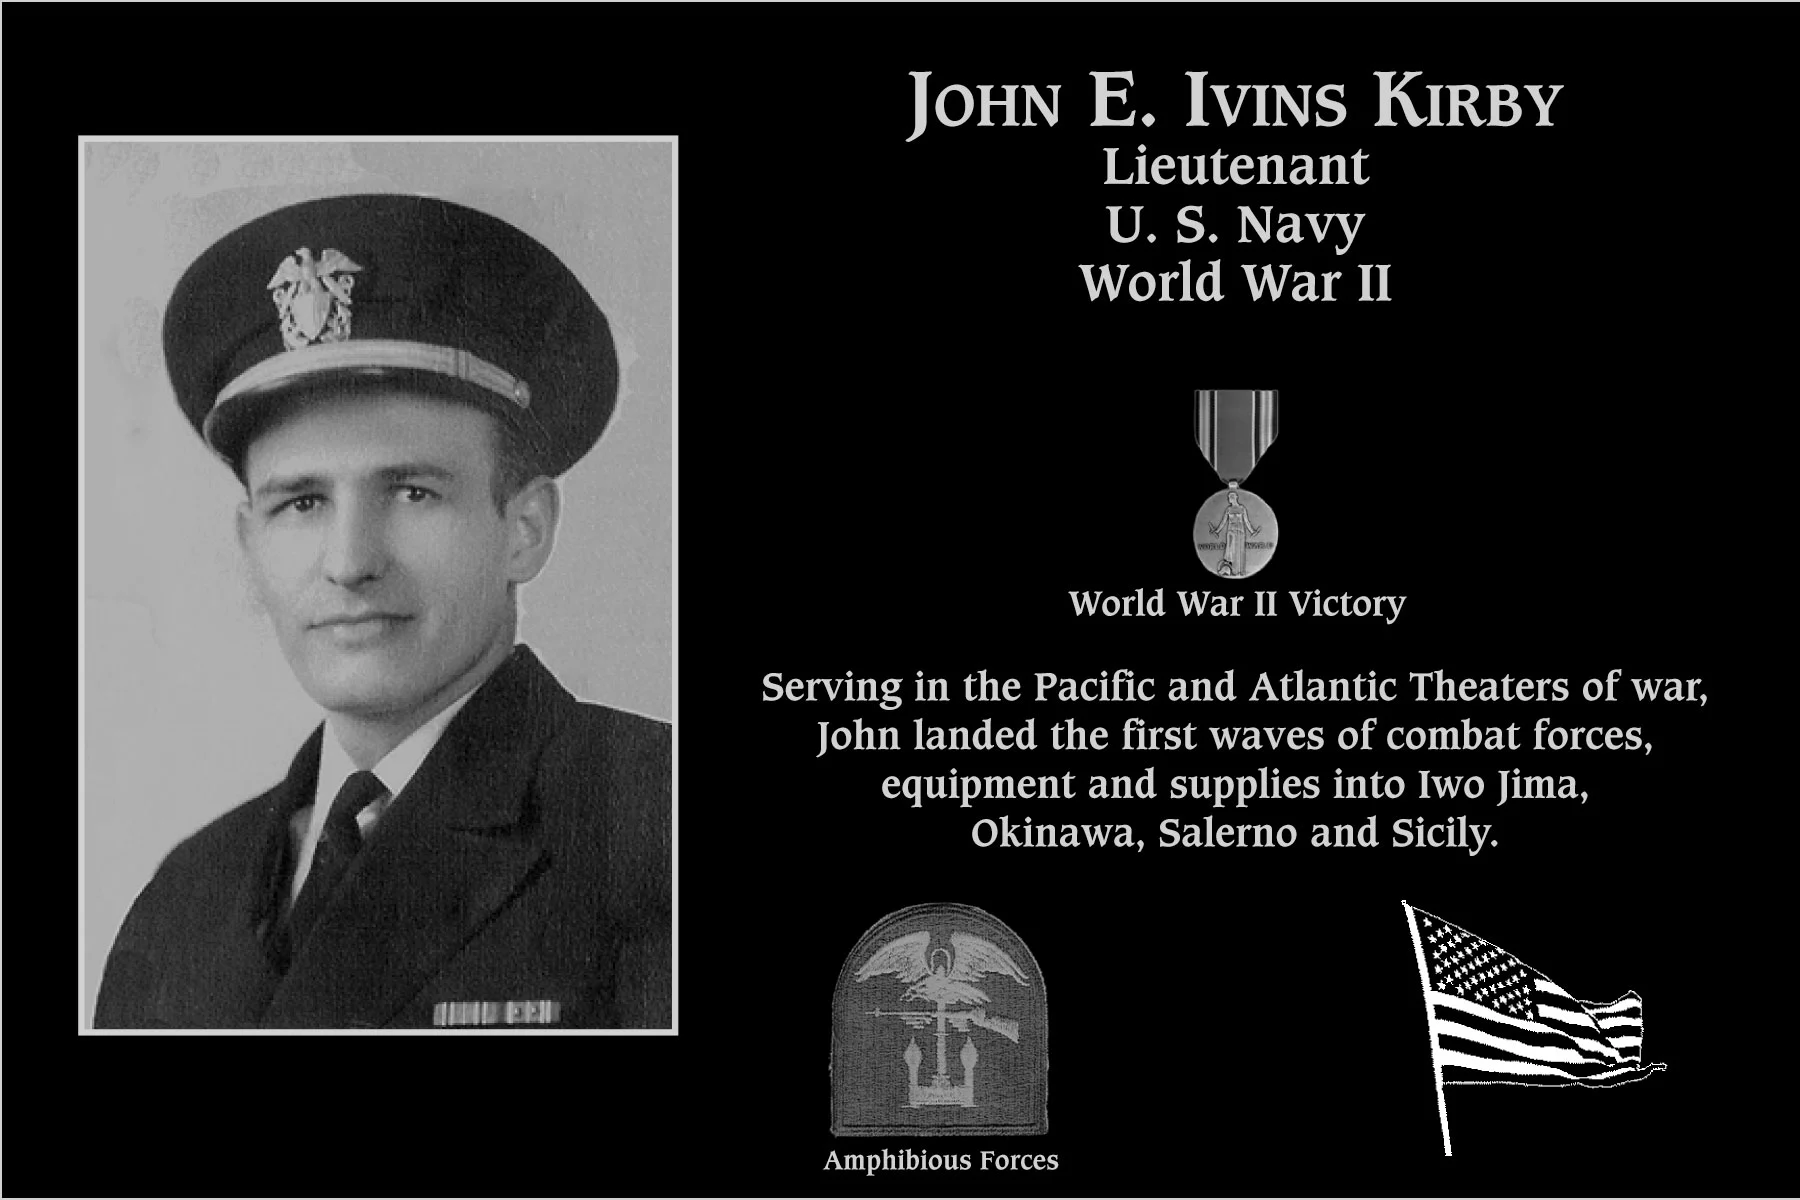 John E. Ivins Kirby